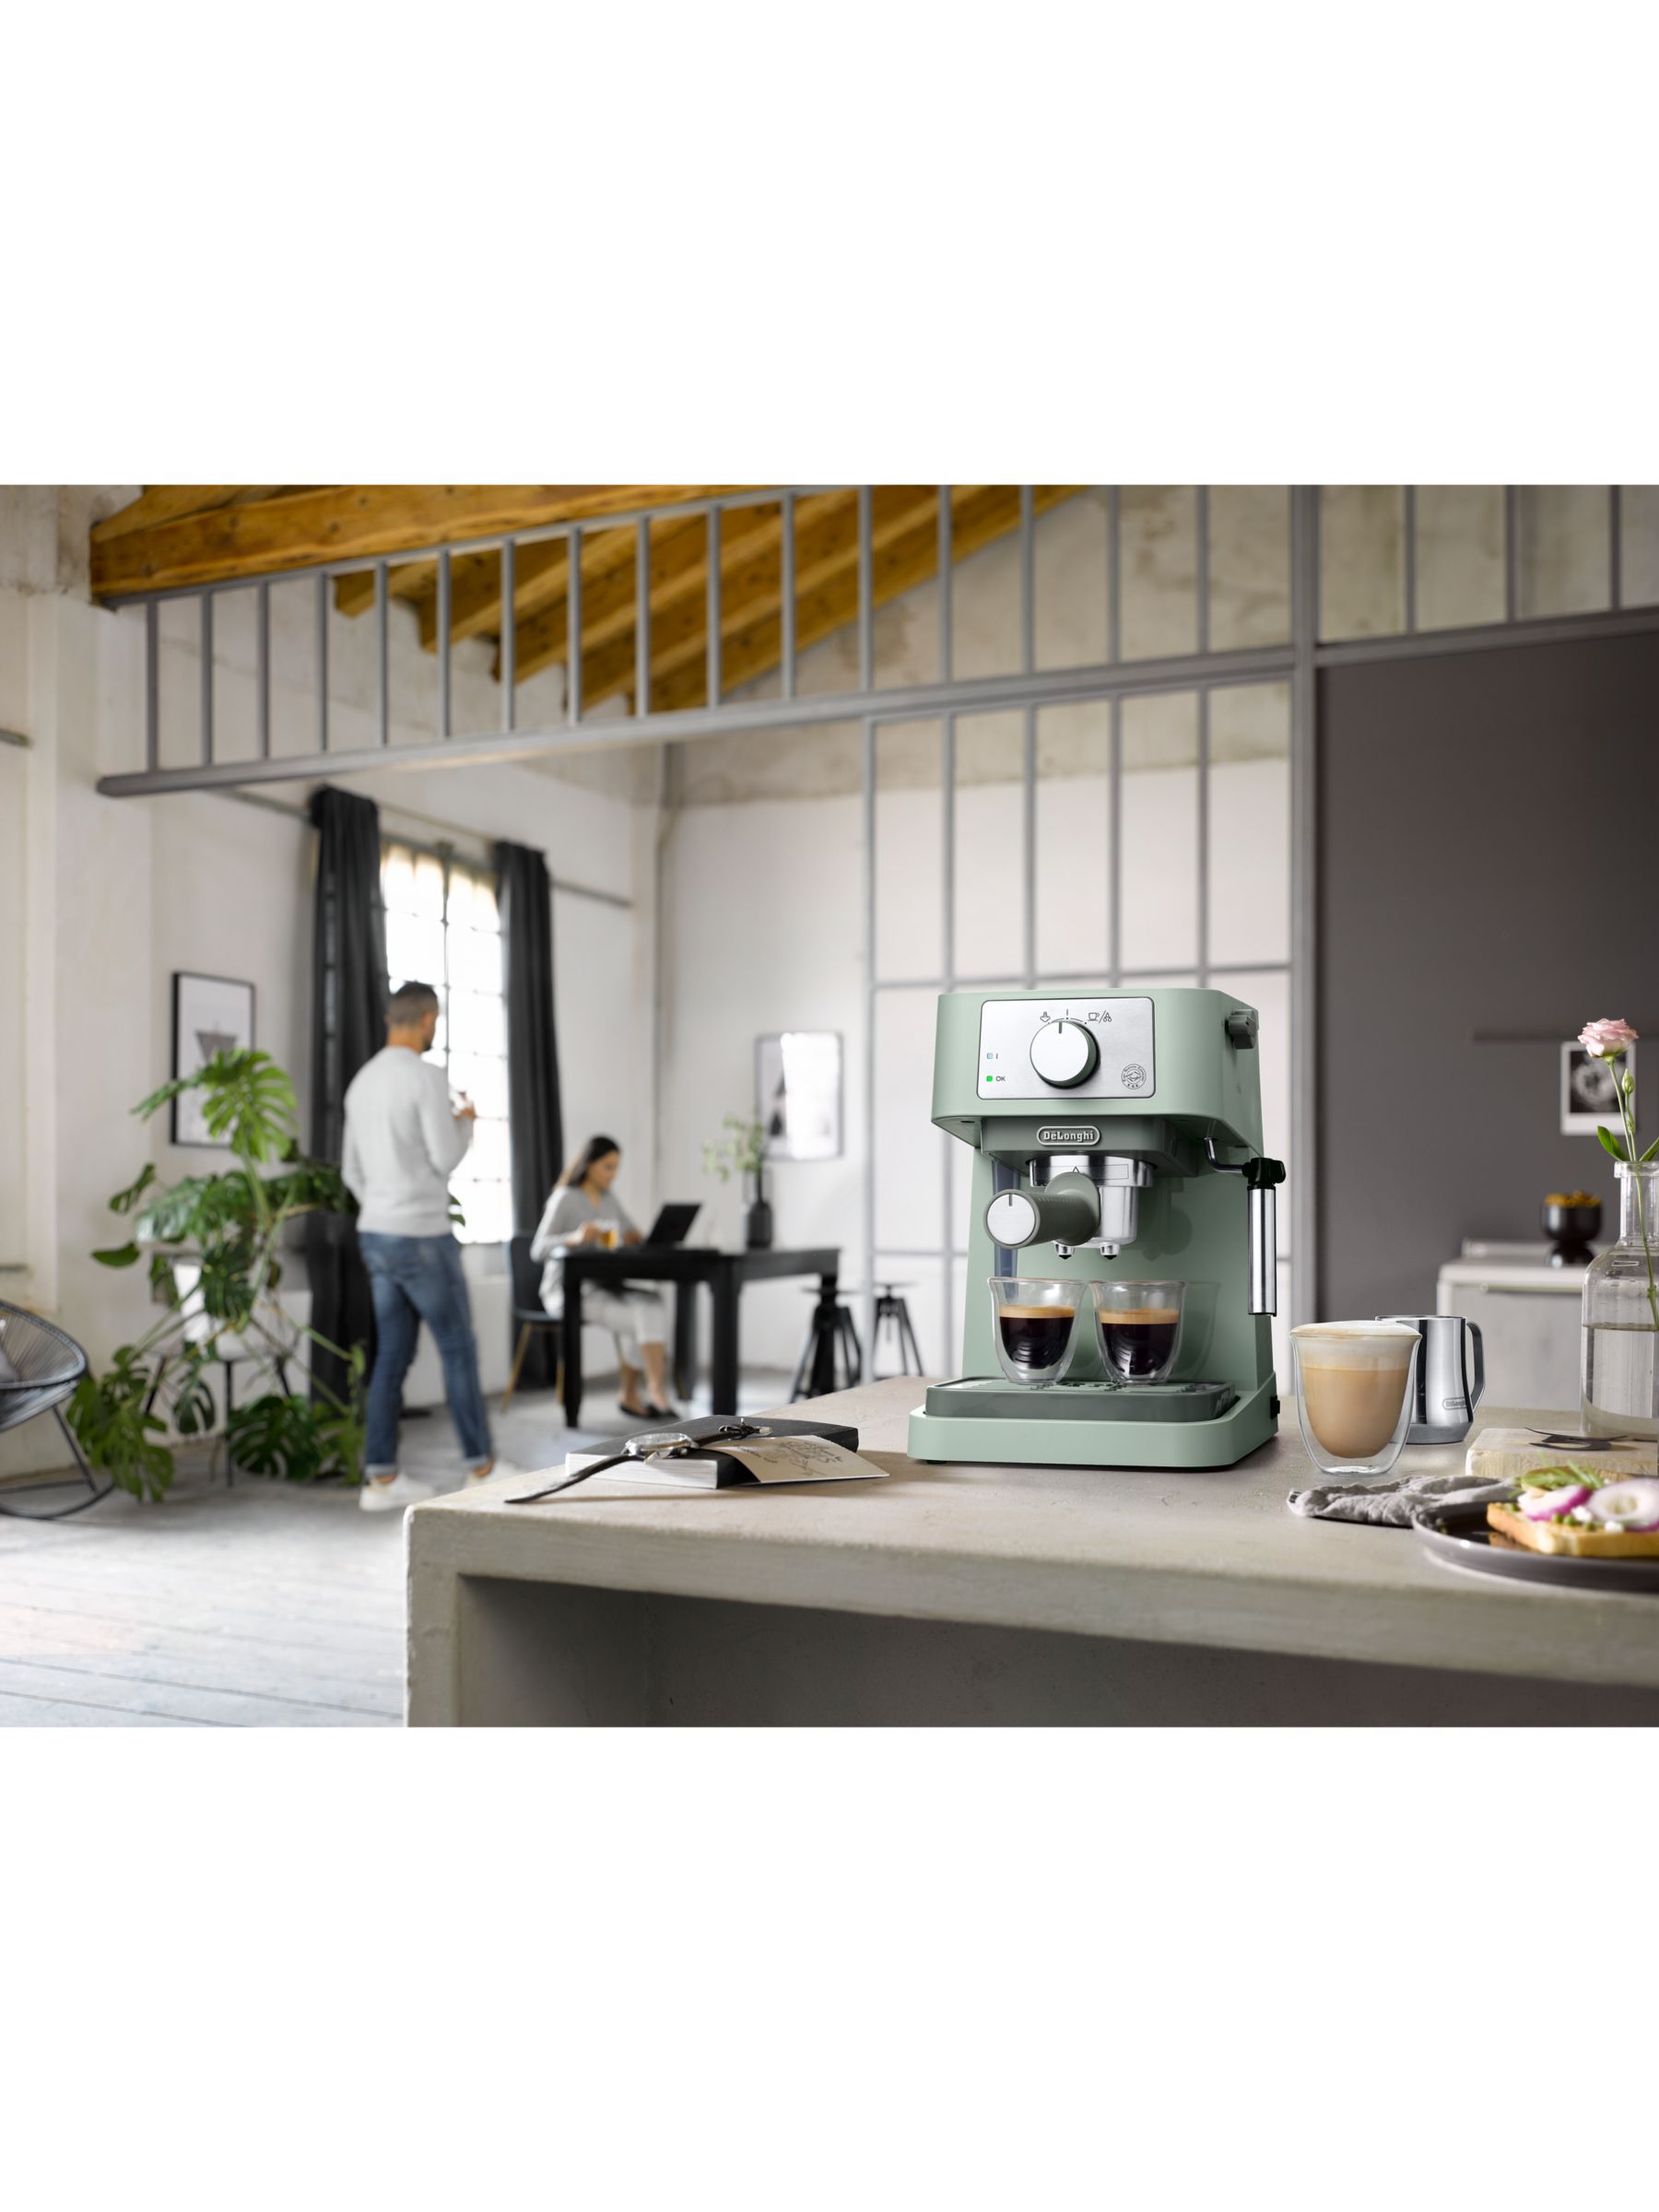 De'Longhi Stilosa Espresso EC260 Coffee Machine, Green